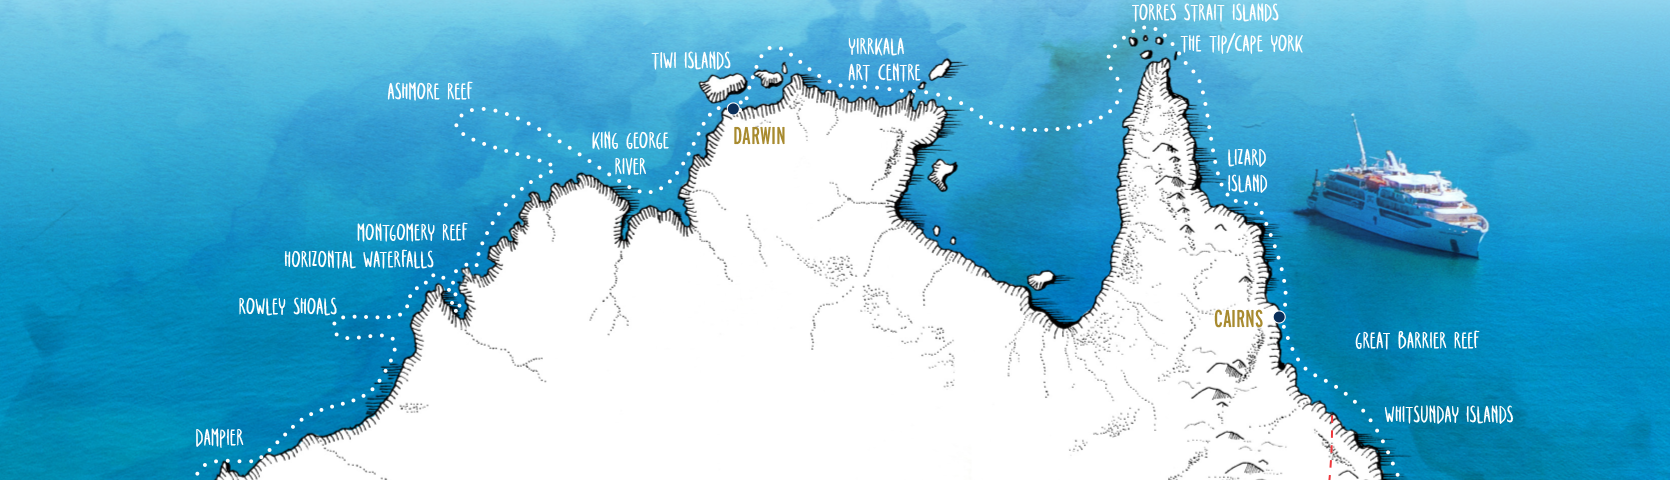 Australian Circumnavigation 2025 - page banner